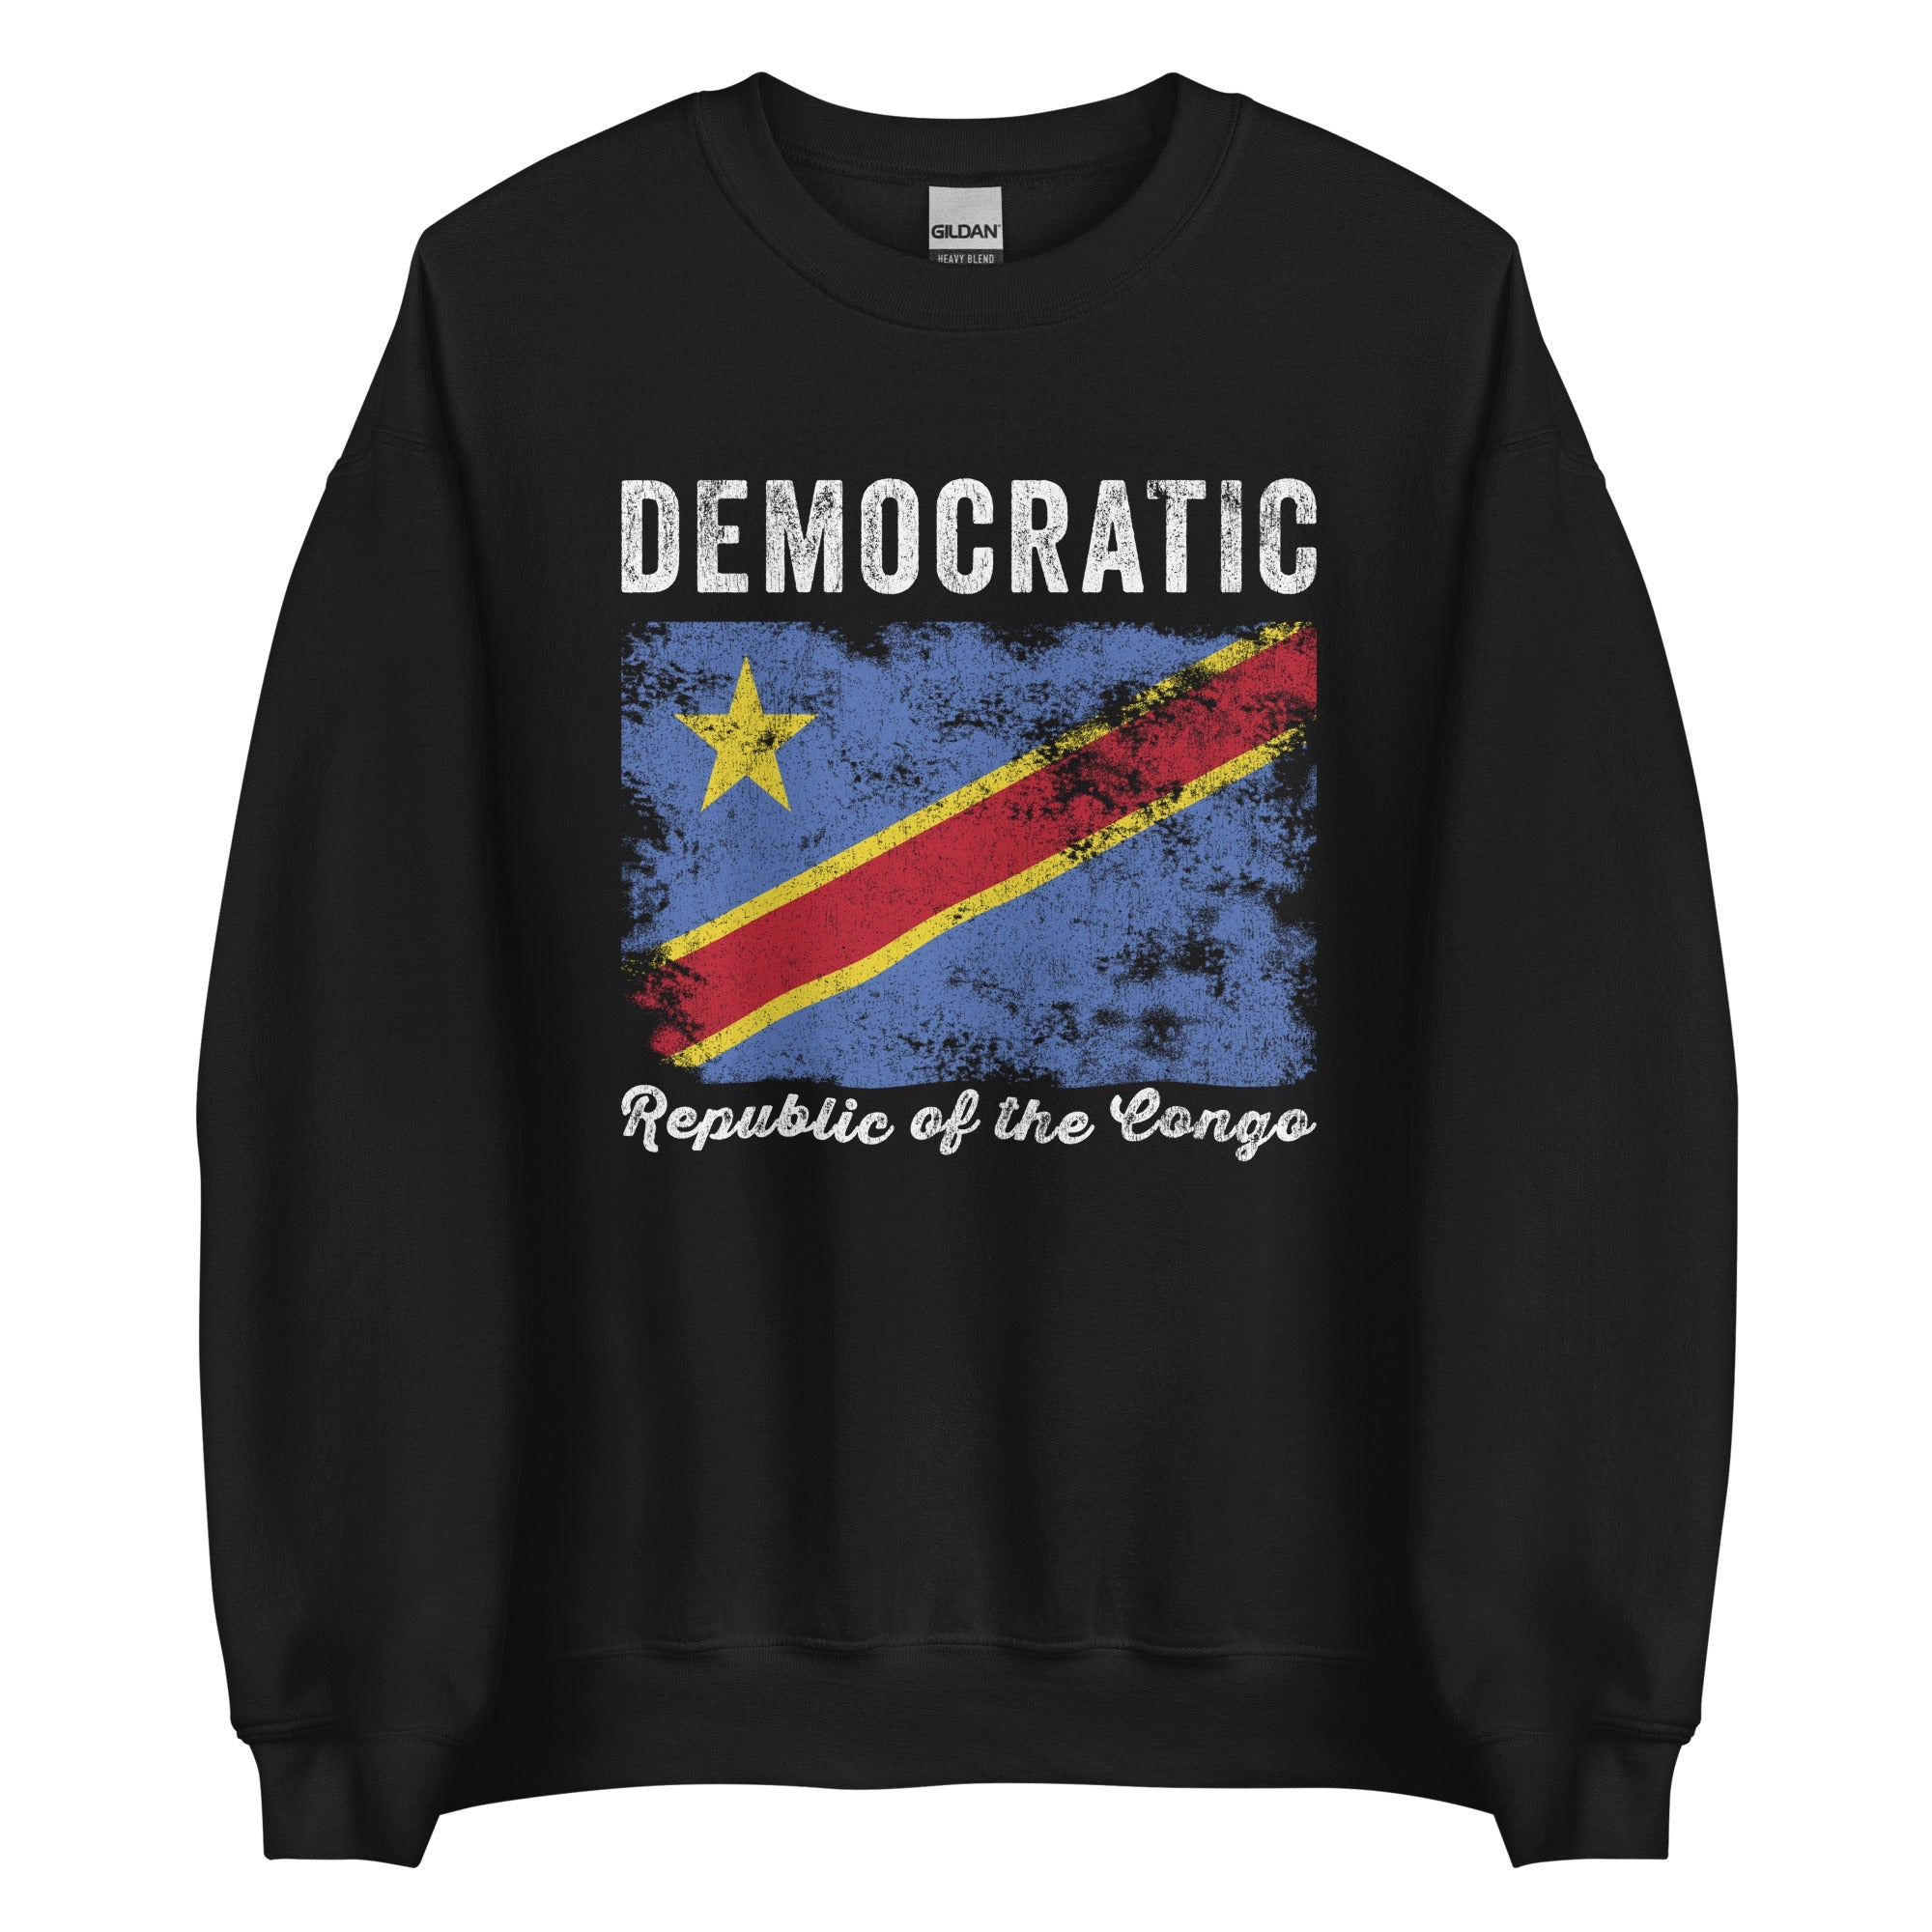 Democratic Republic of the Congo Flag Sweatshirt